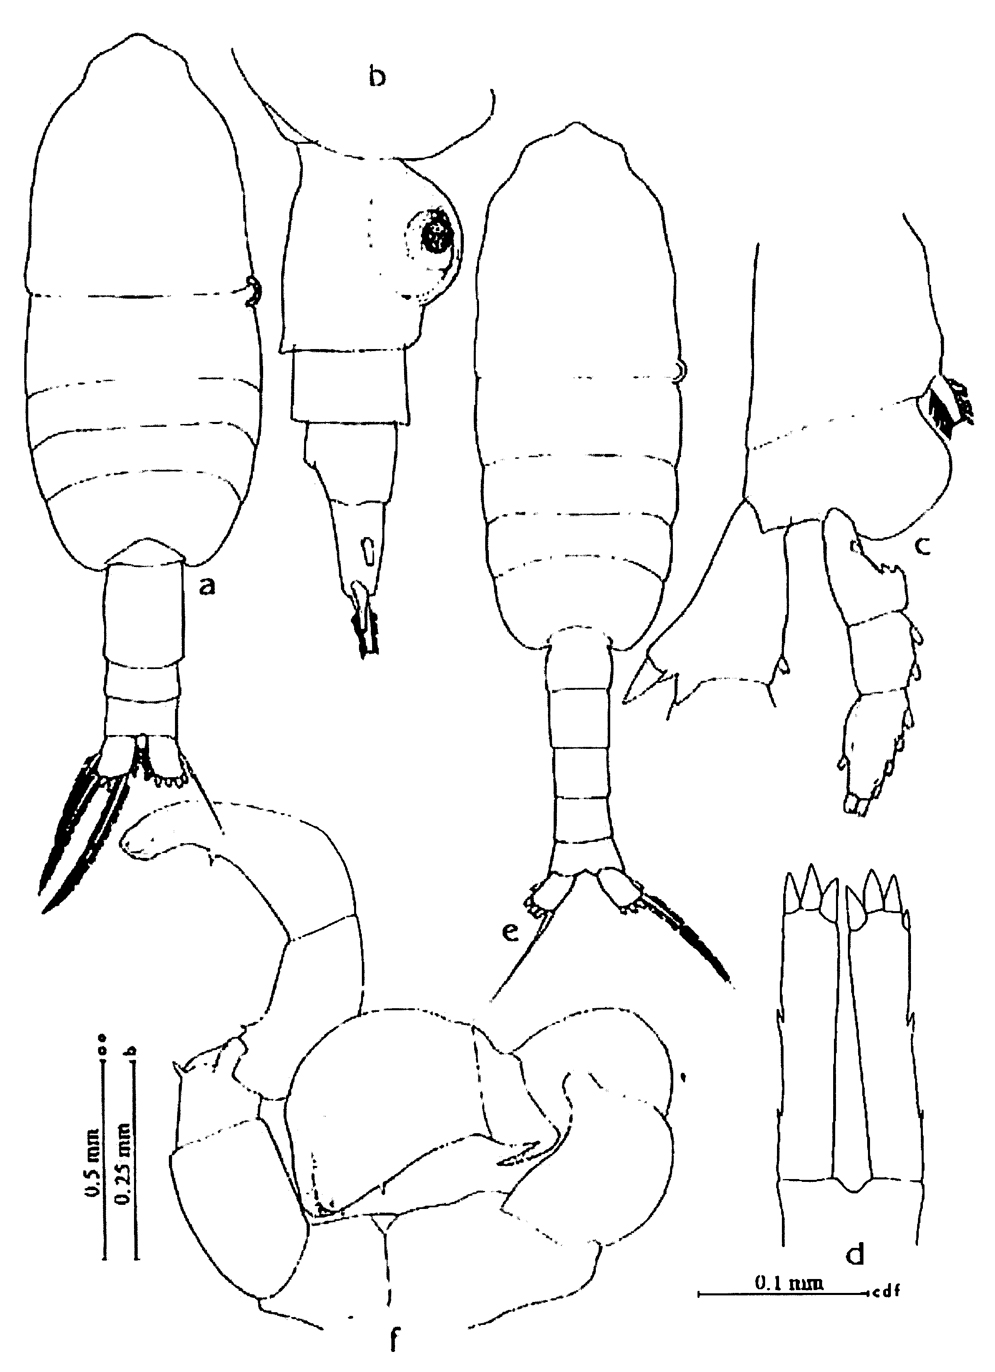 Species Pleuromamma gracilis - Plate 29 of morphological figures